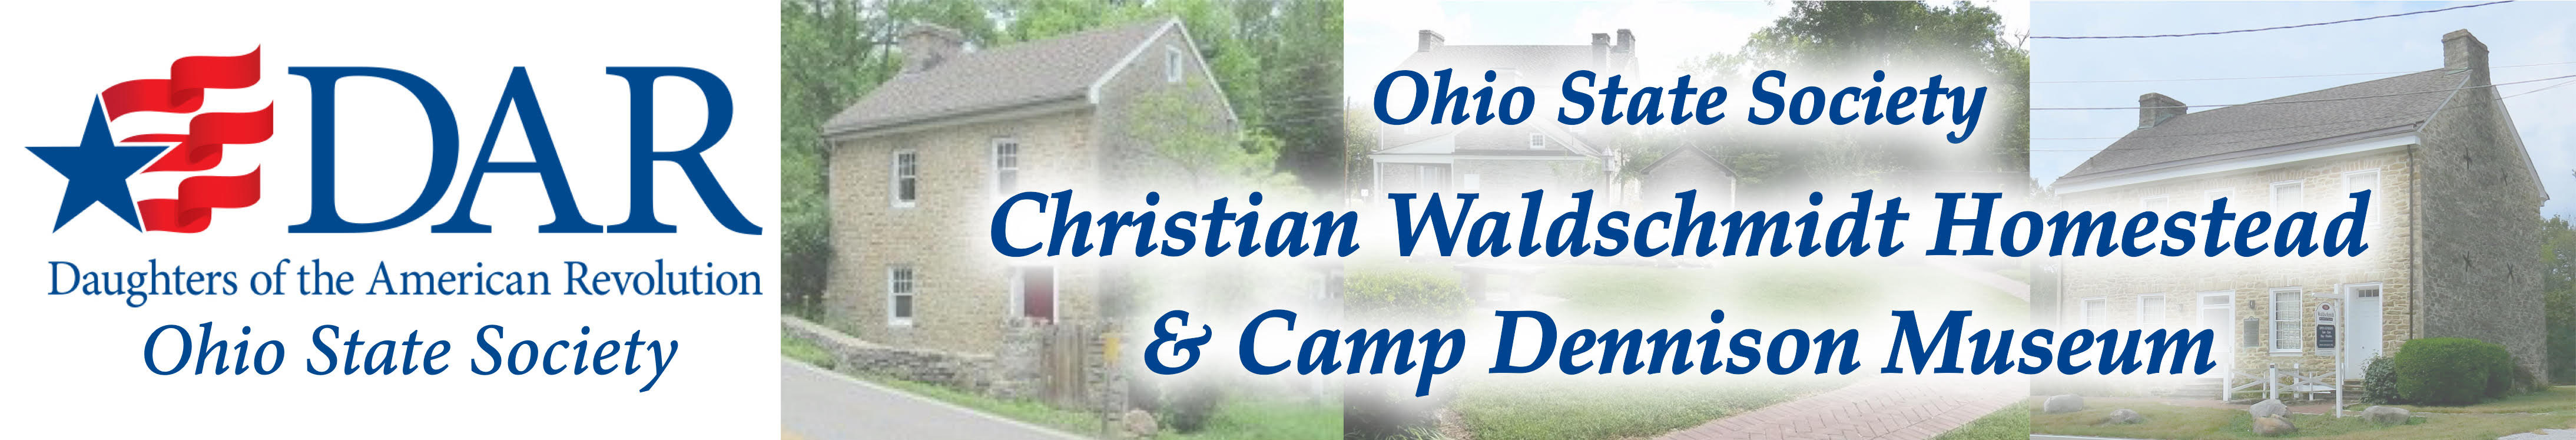 Christian Waldschmidt Homestead & Camp Dennison Museum